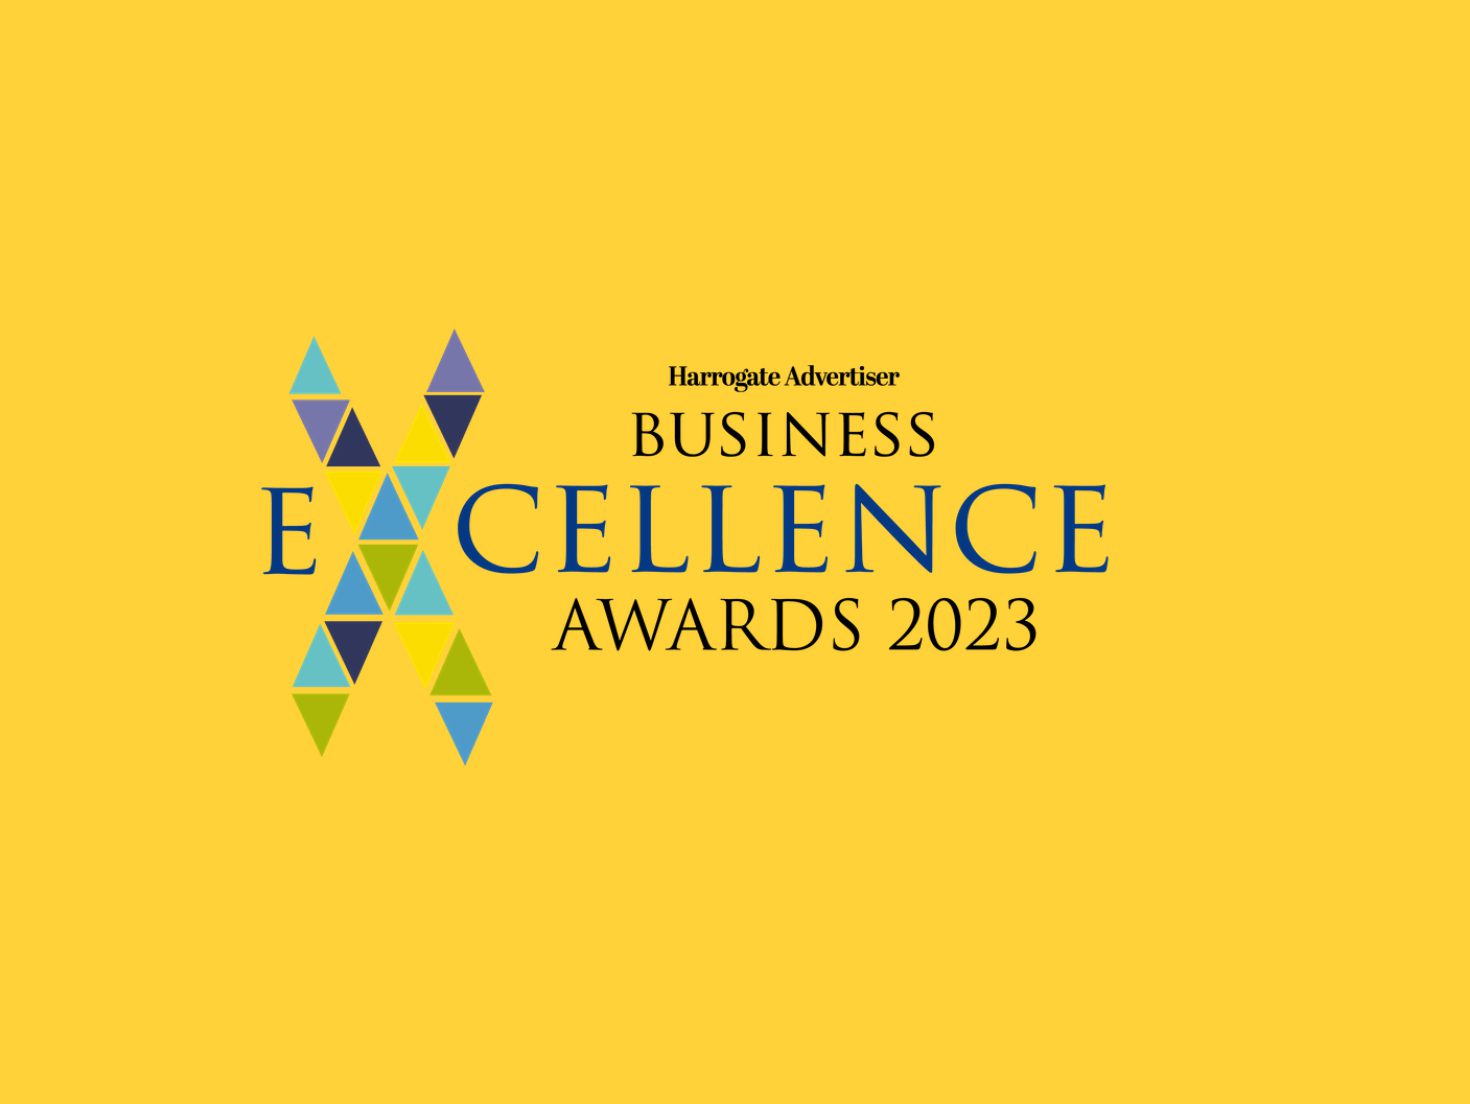 Harrogate Advertiser Business Excellence Awards 